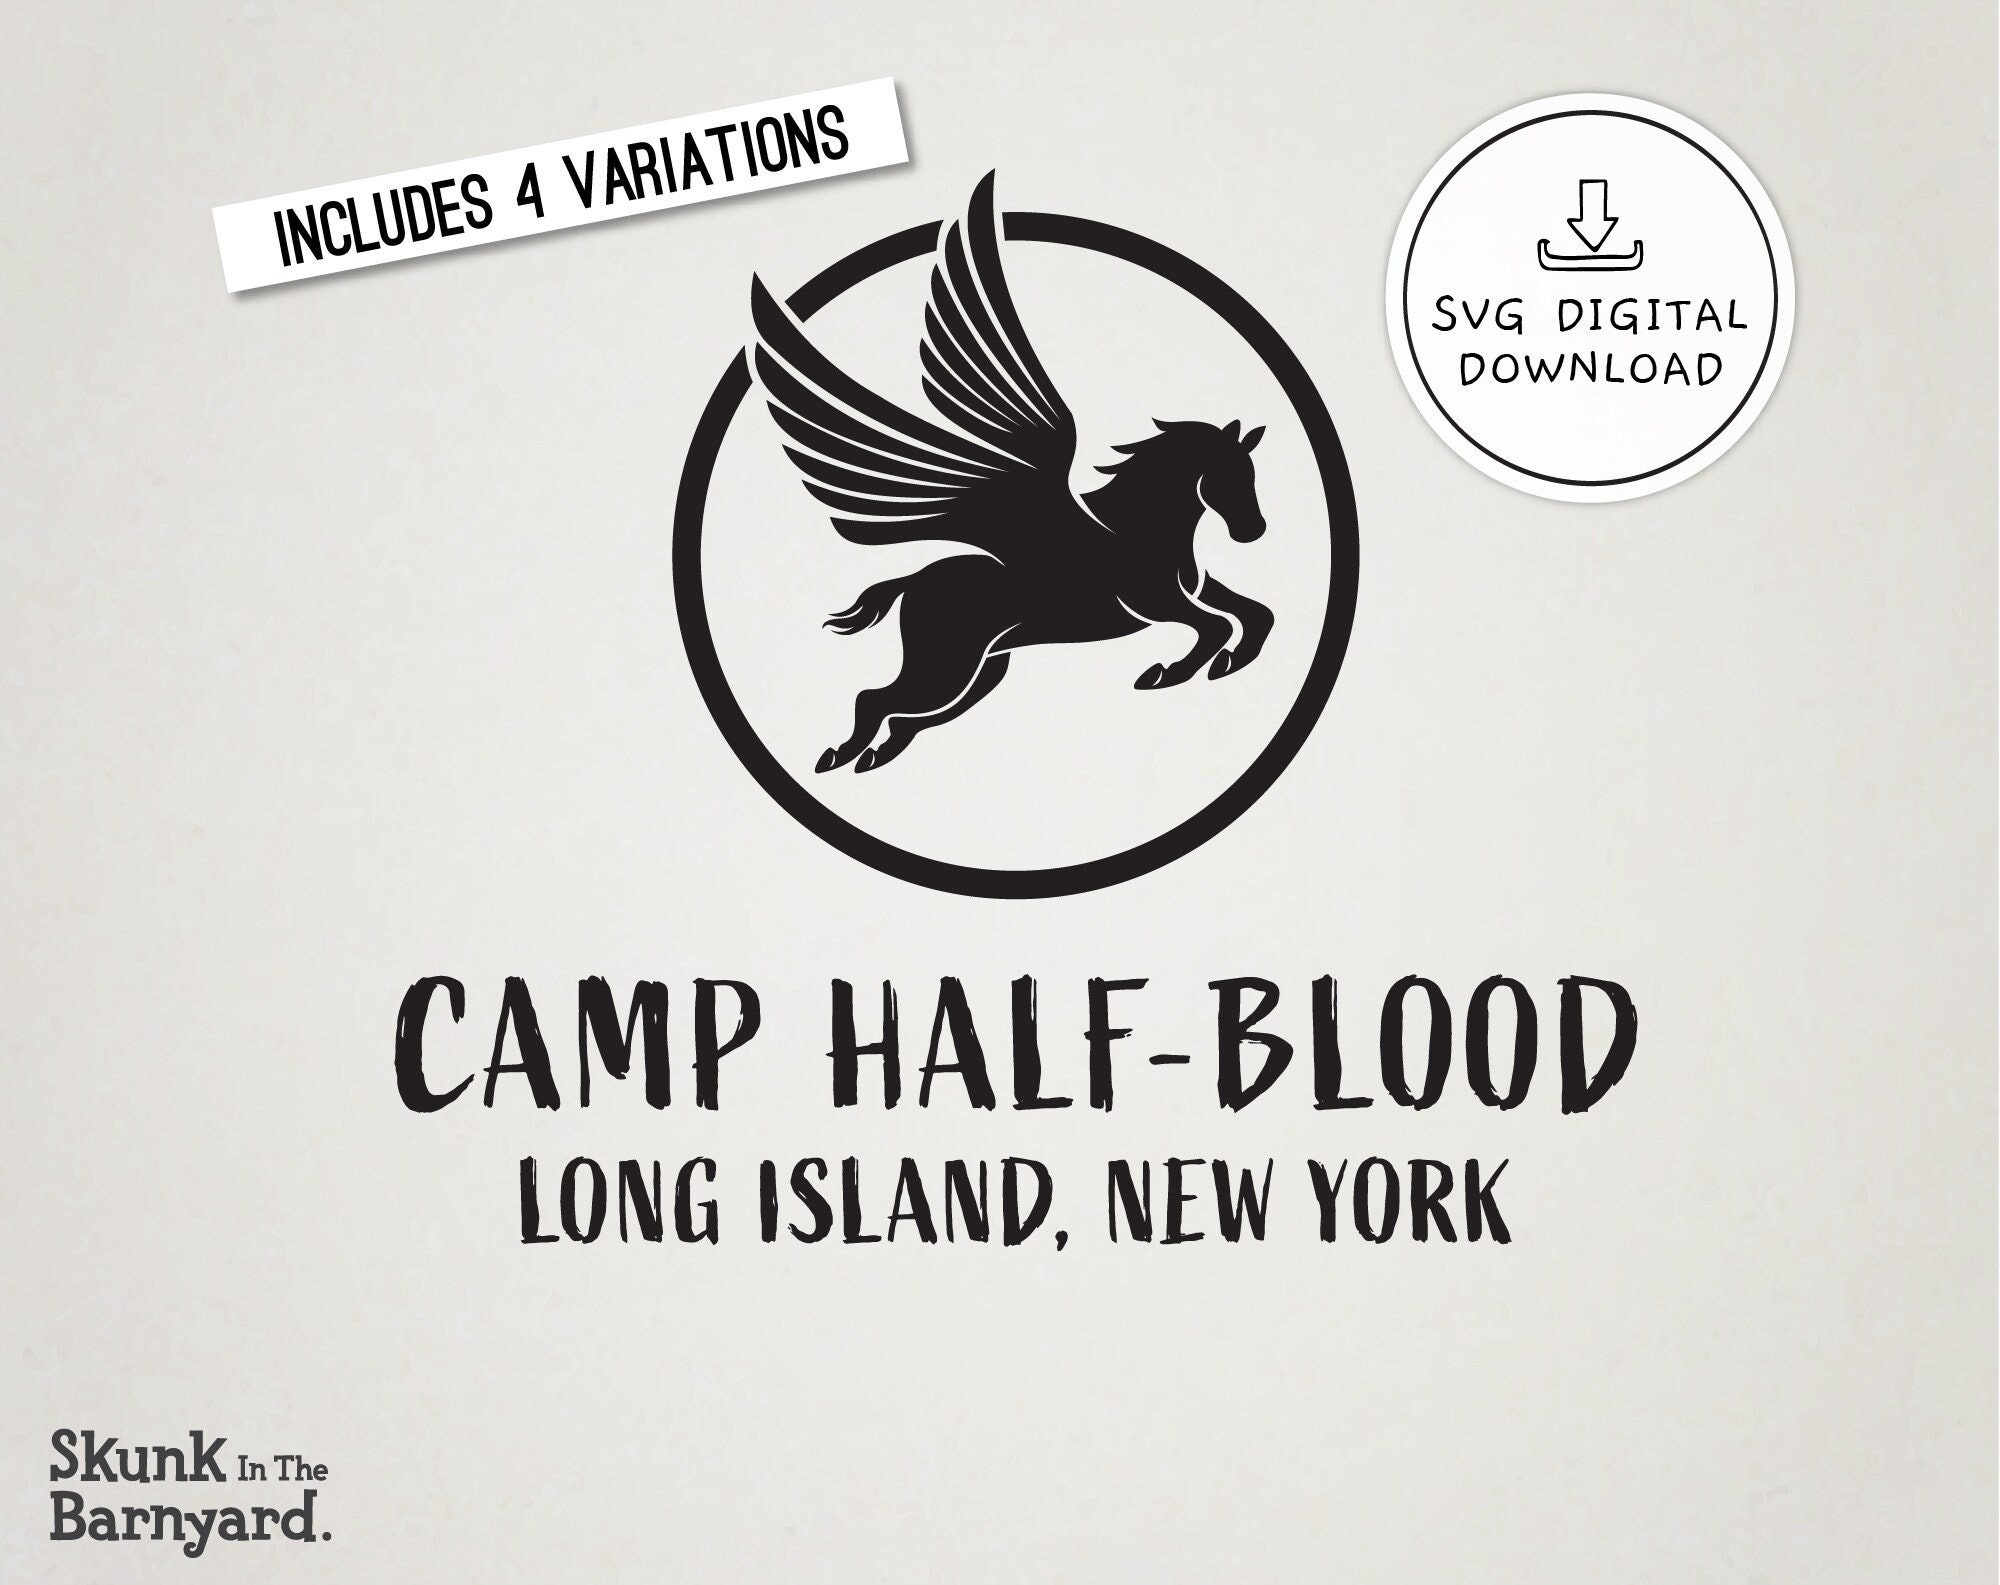 Camp Half Blood Long Island Sound Svg